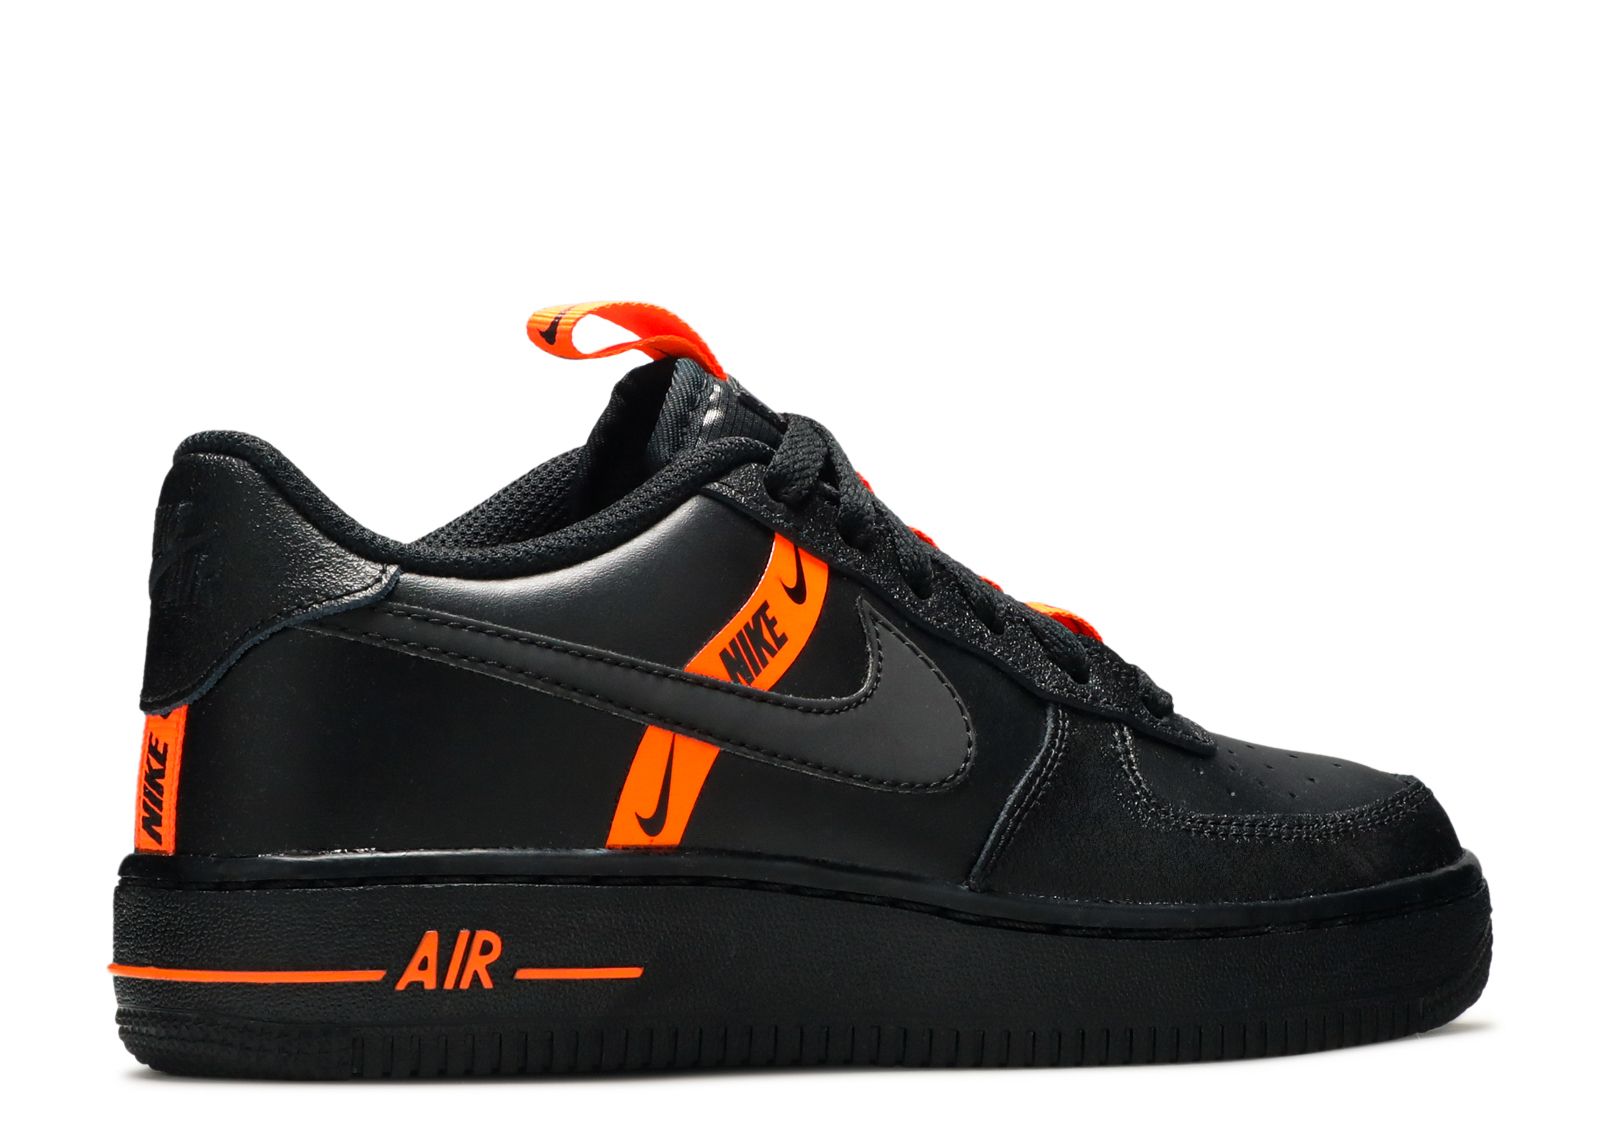 limpiador Desnatar inteligente Air Force 1 LV8 KSA GS 'Worldwide Pack Black Total Orange' - Nike - CT4683  001 - black/total orange/black | Flight Club